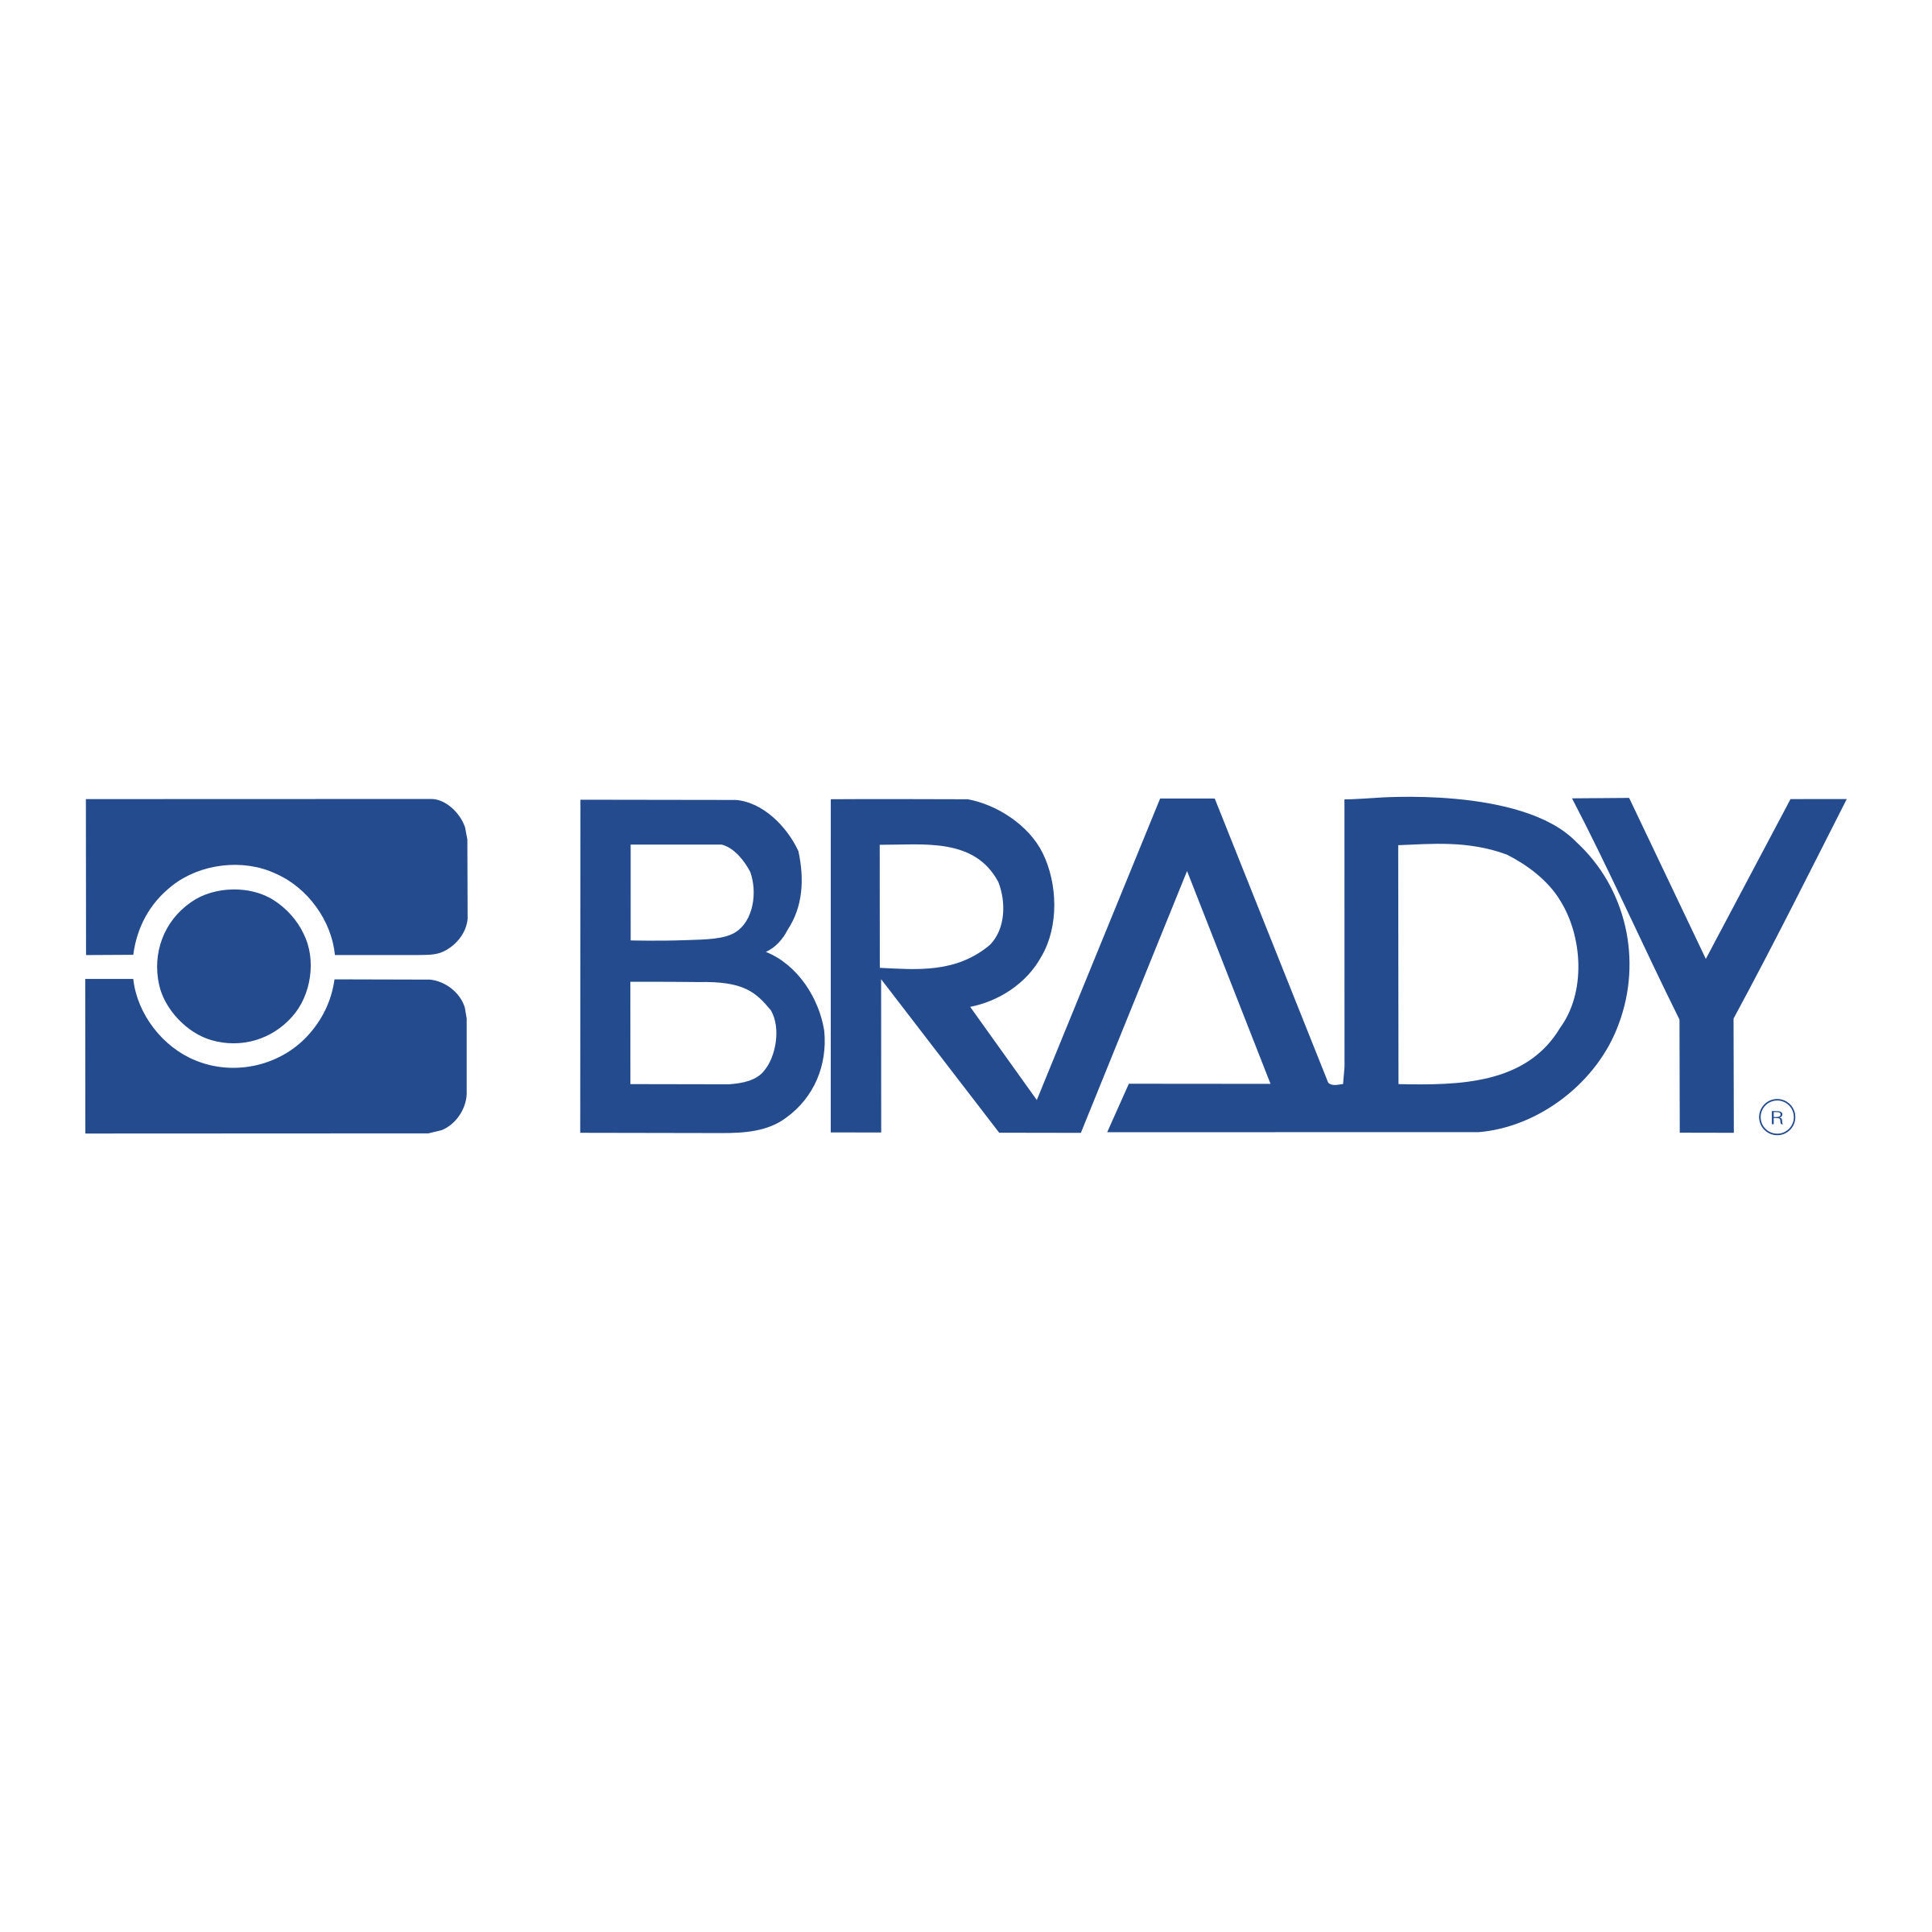 Brady Logo - Brady Logo PNG Transparent & SVG Vector - Freebie Supply